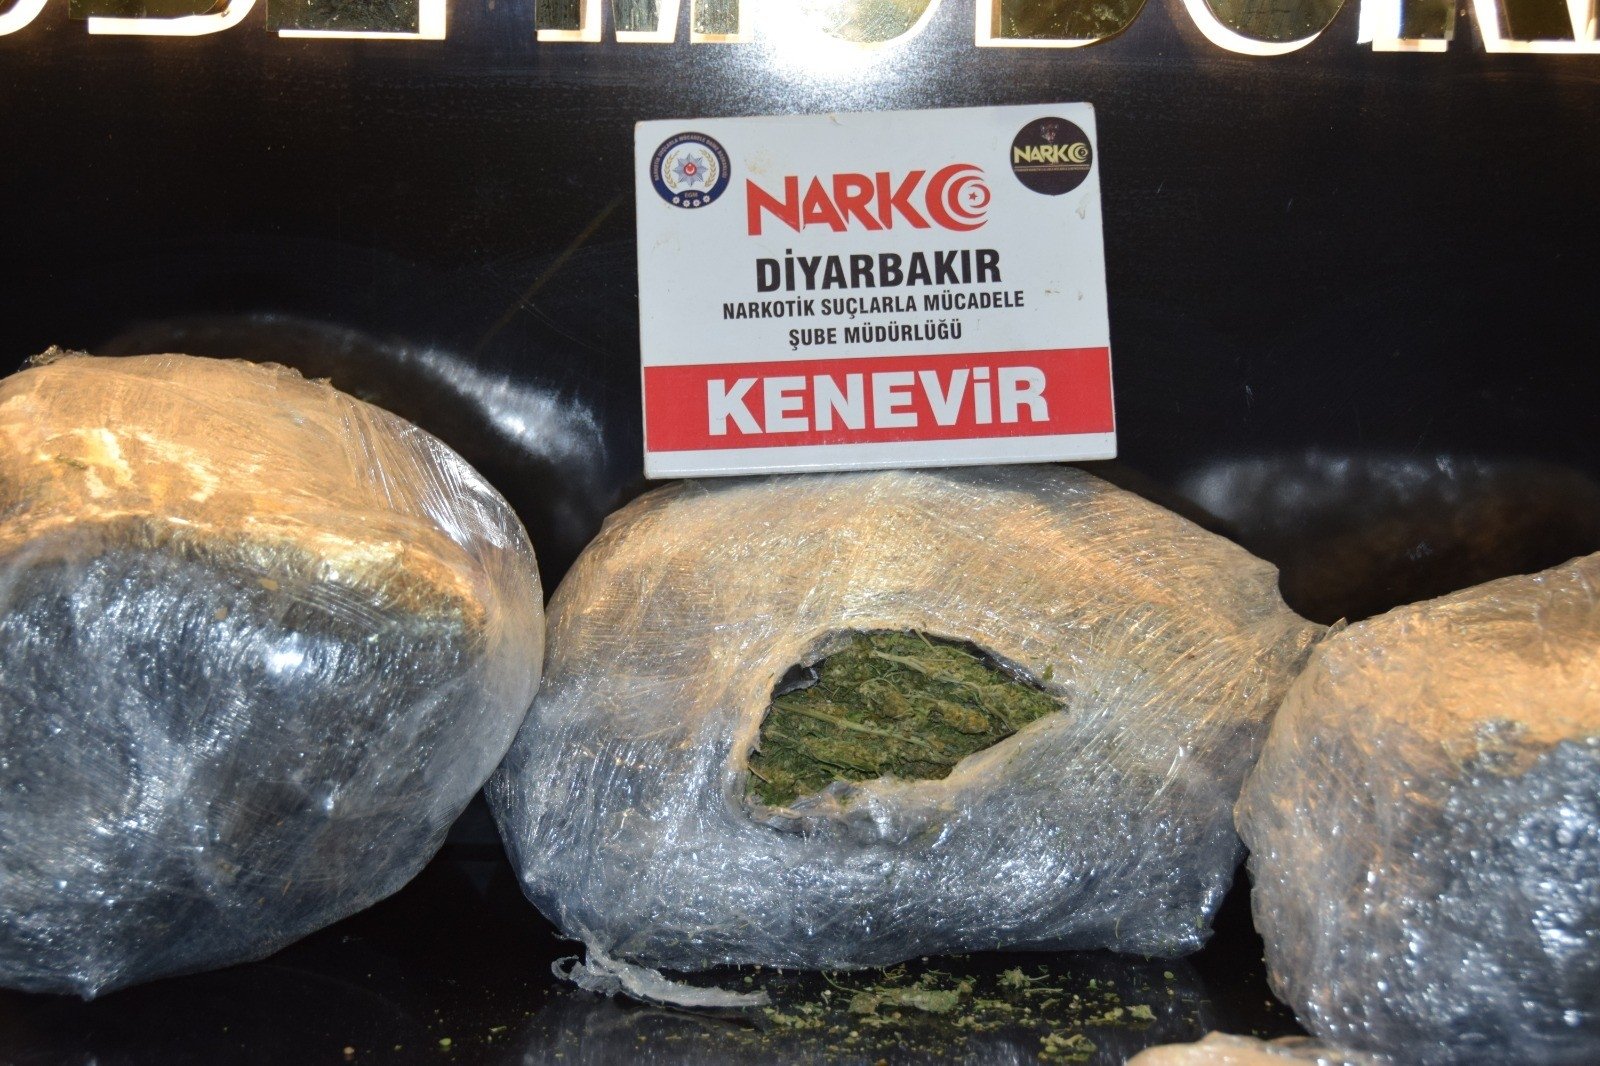 Police display packs of cannabis seized in an operation in Diyarbakır, southeastern Turkey, Nov. 26, 2020. (IHA Photo)